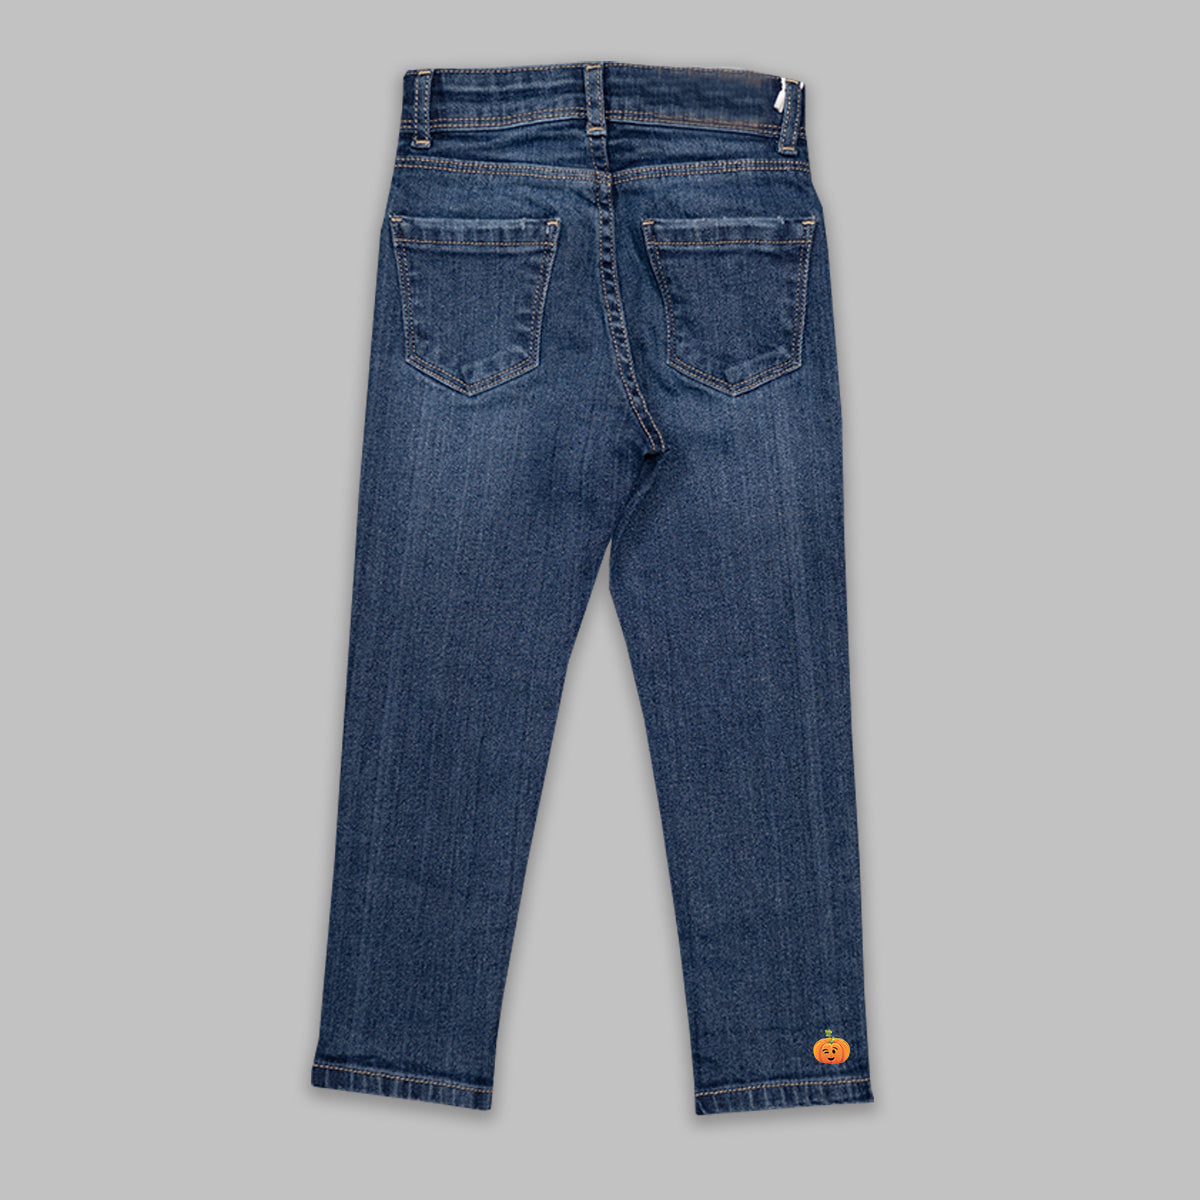 Copen: What Makes A Pair Of Jeans Good Jeans? - Long John